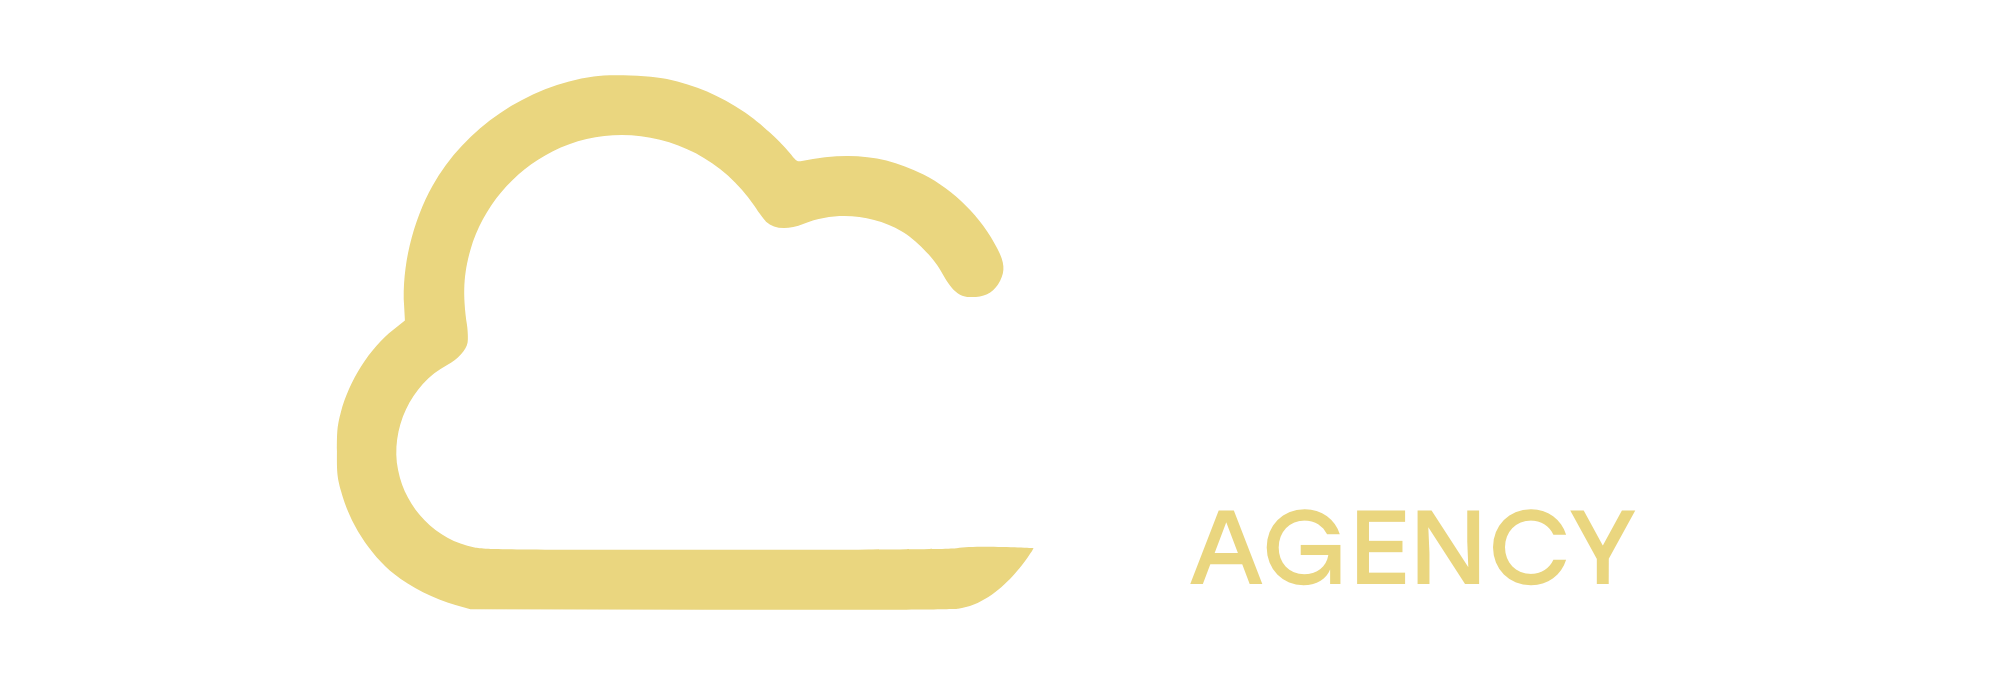 onlyfans onlydreams logo